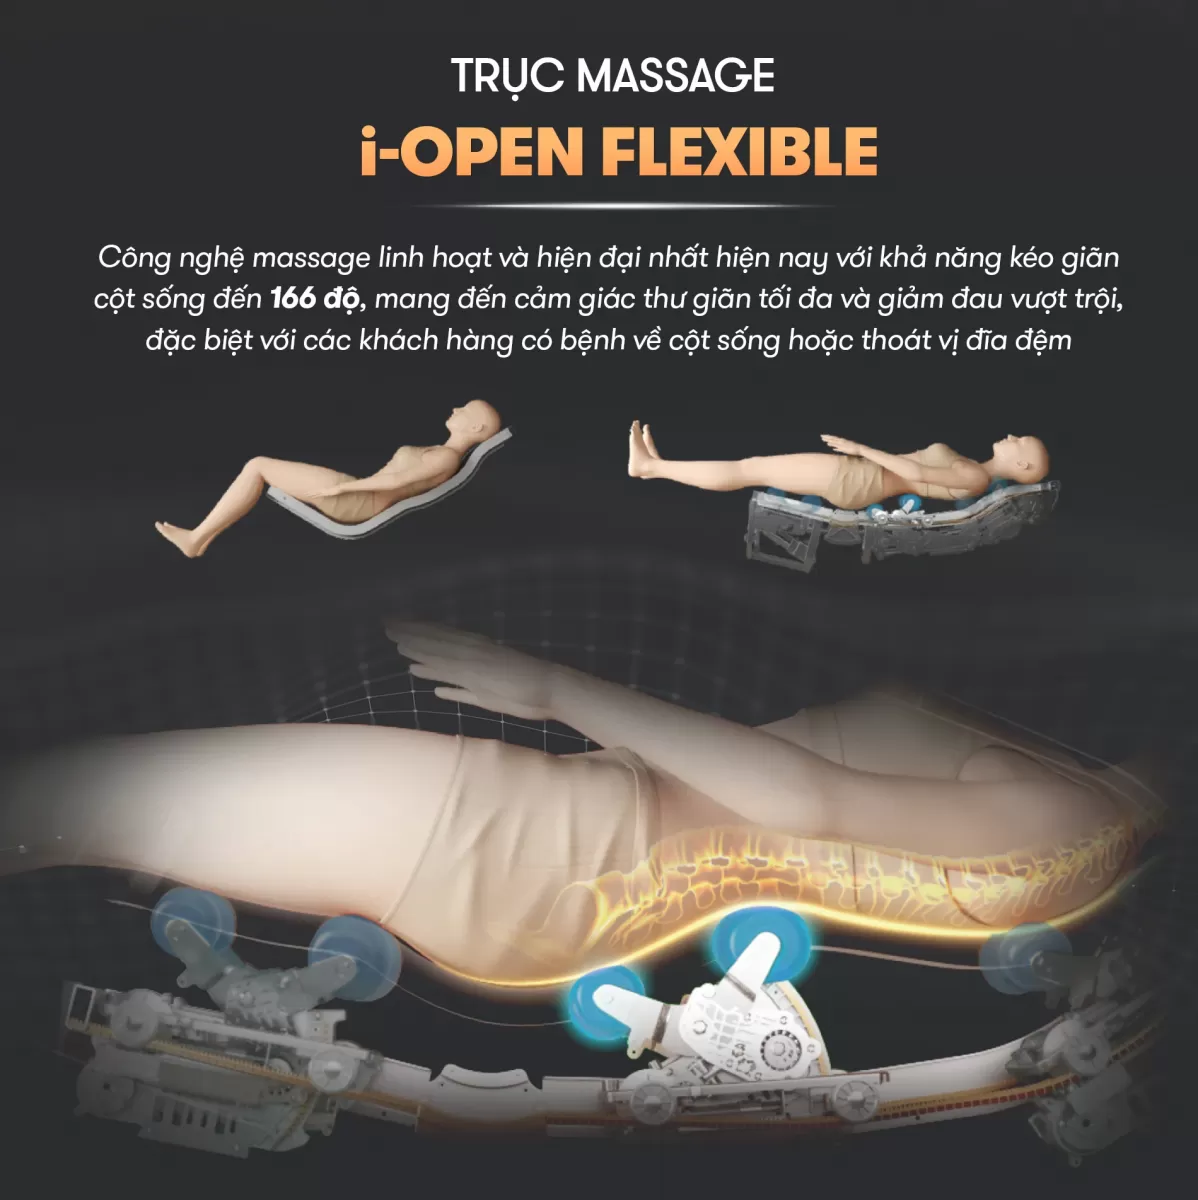 Trục massage I-OPEN Flexible của Ghế Massage Kingsport Premium B6